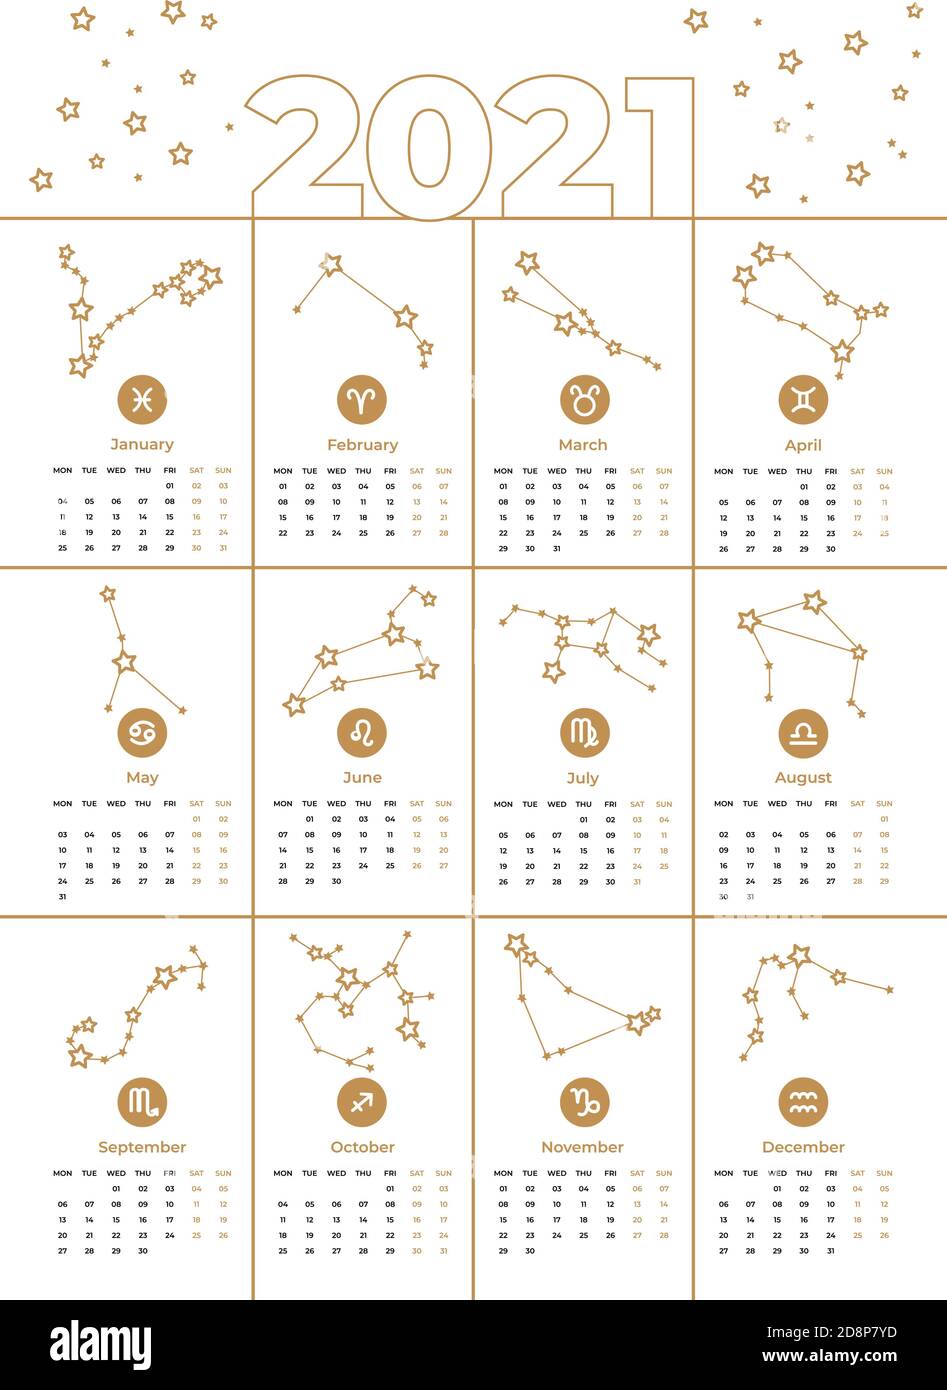 Zodiac Sign Dates 2021